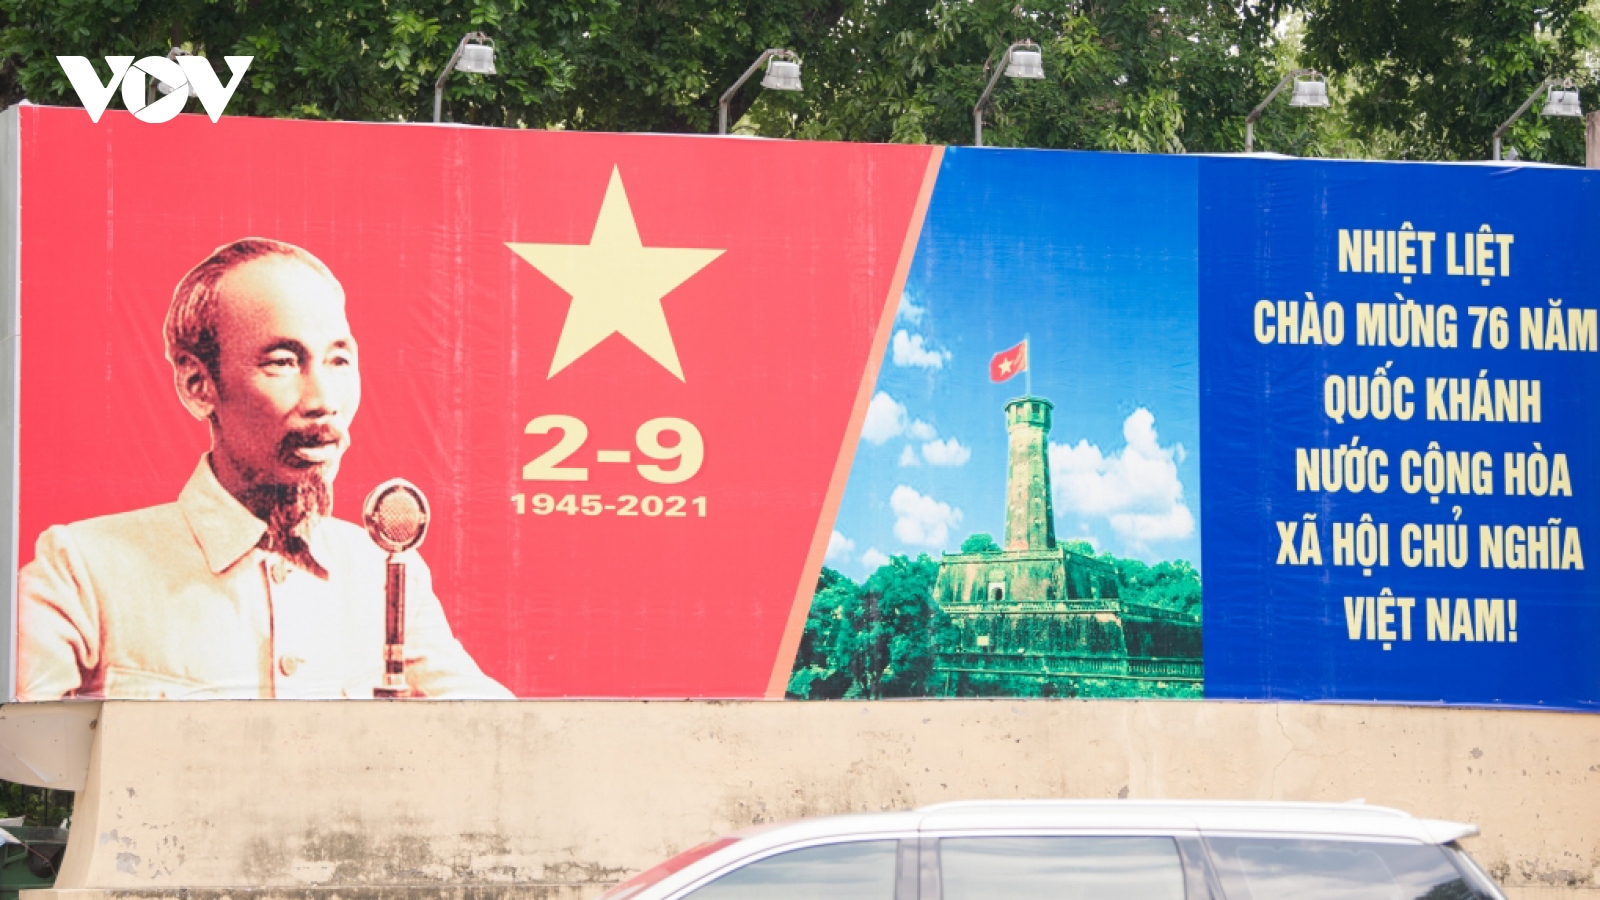 PM Pham Minh Chinh's 2021 National Day speech